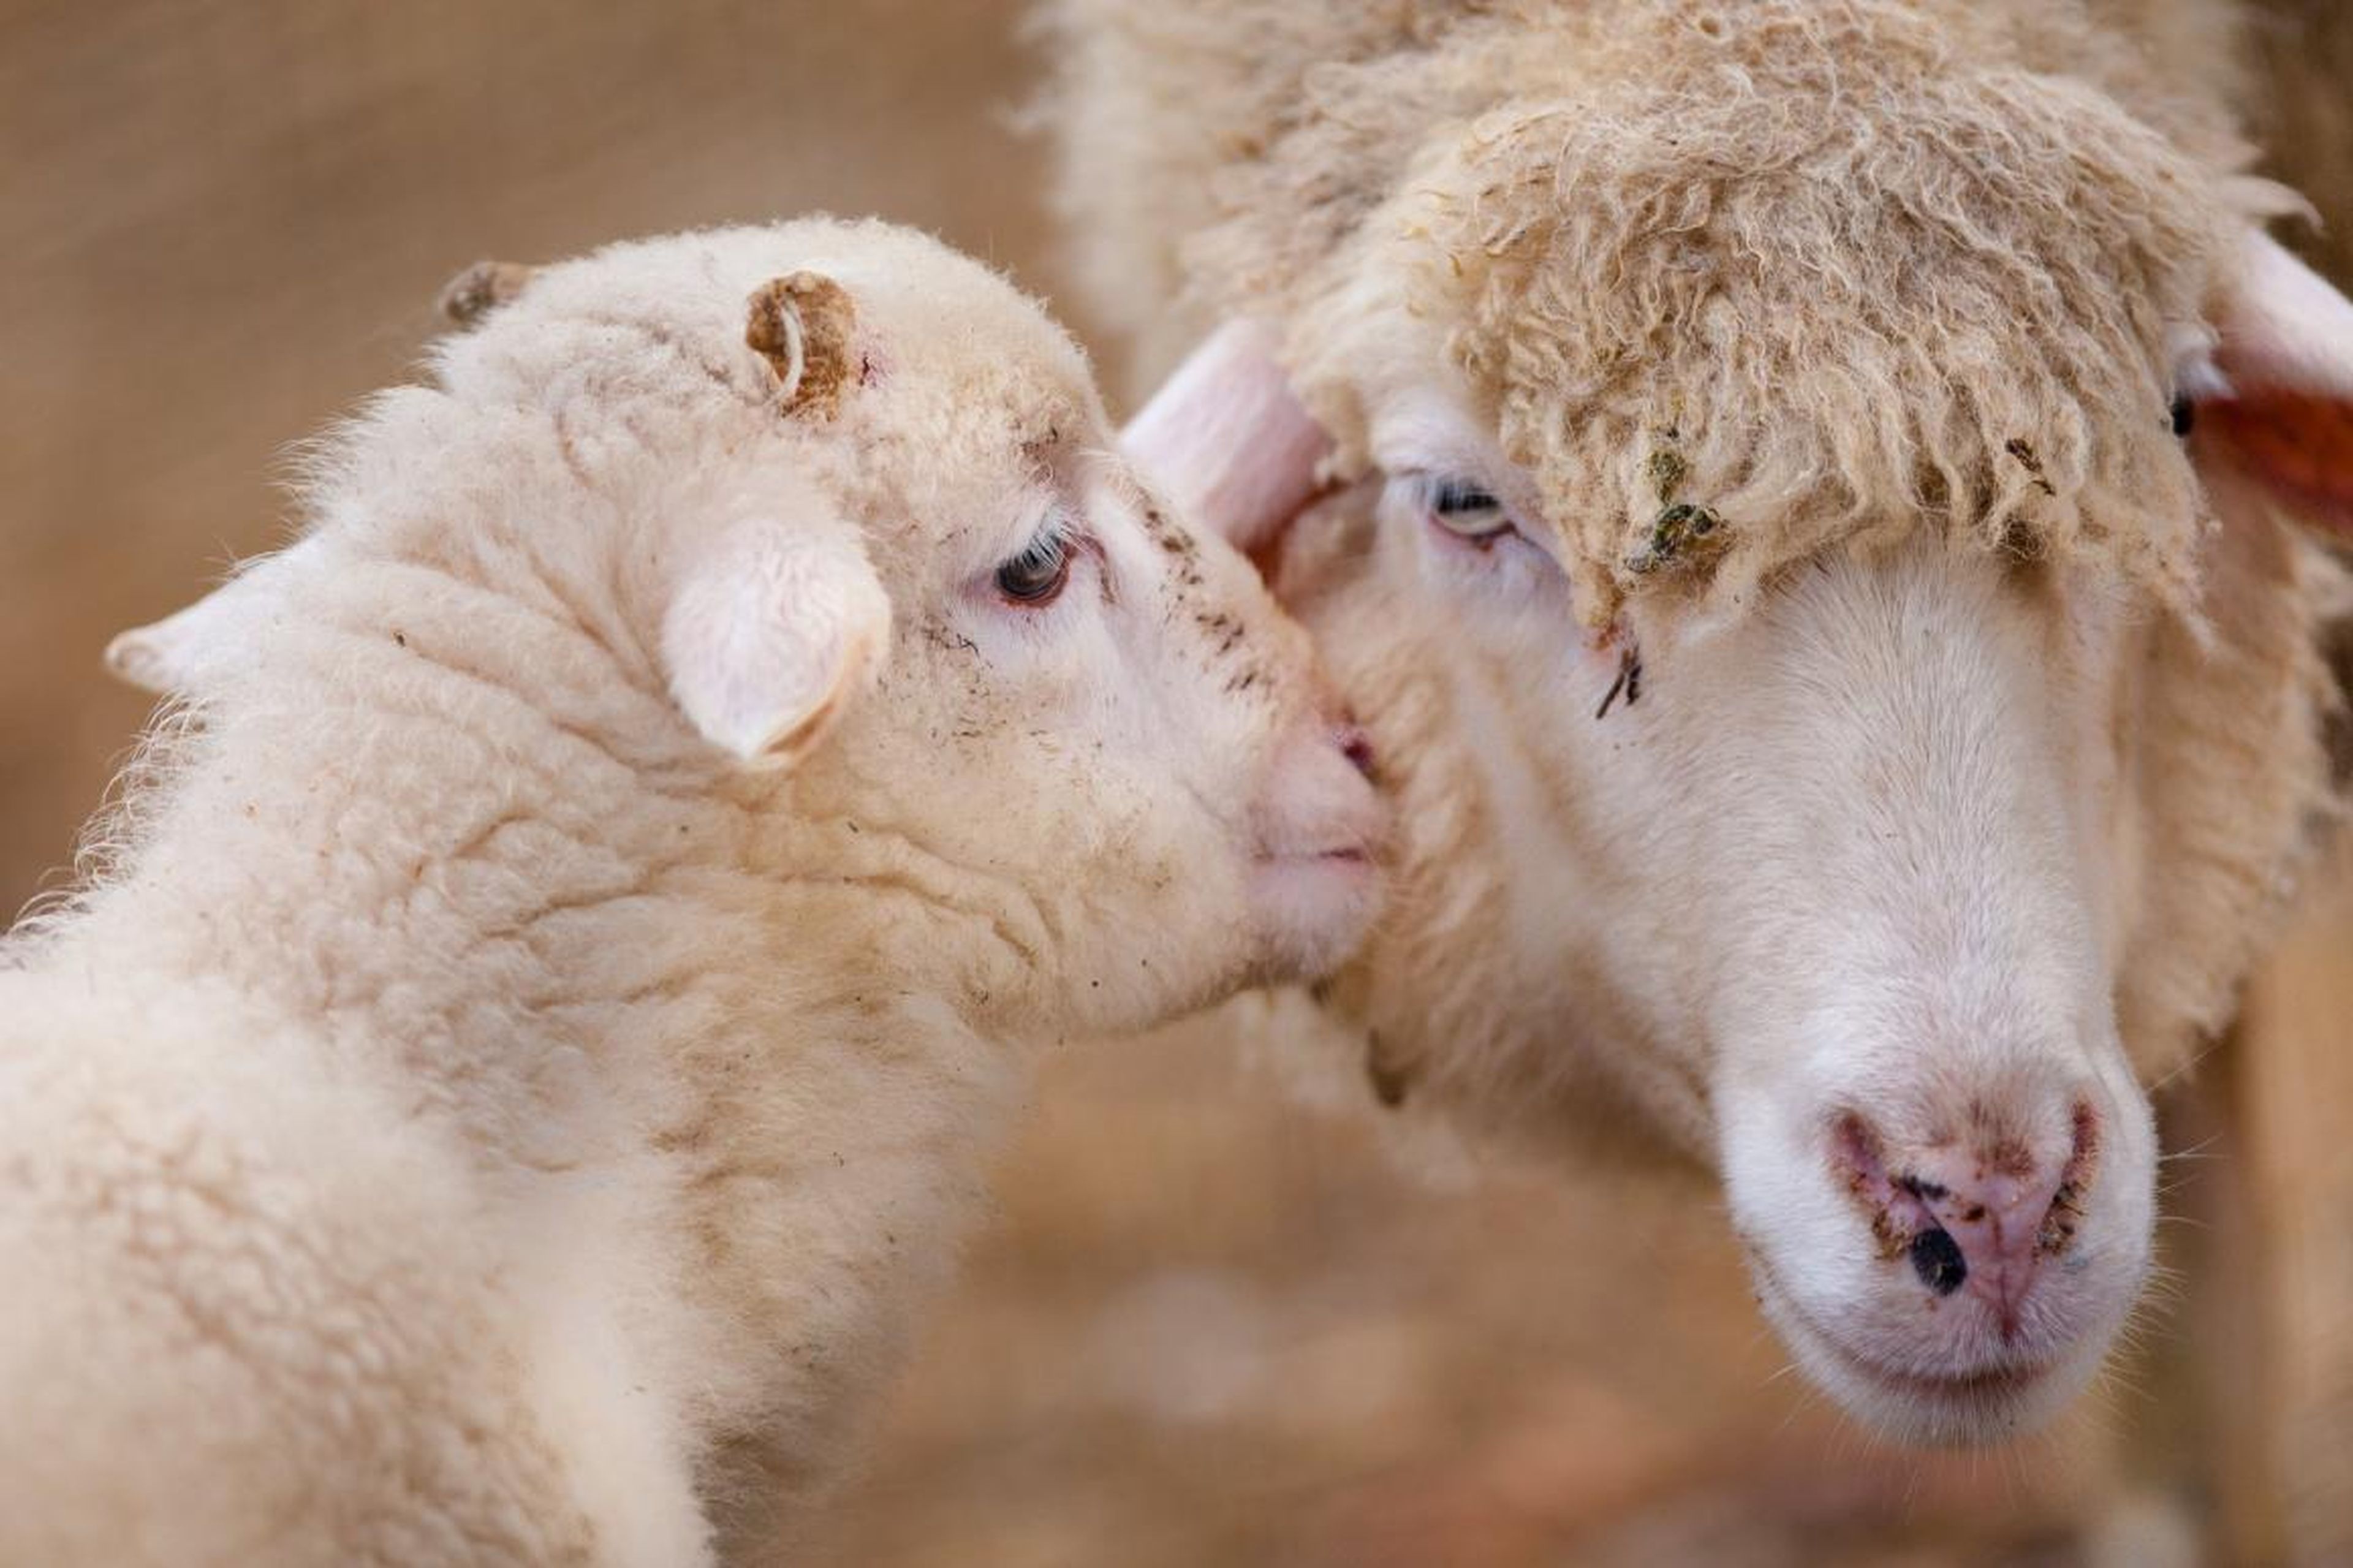 Un besito entre ovejas.